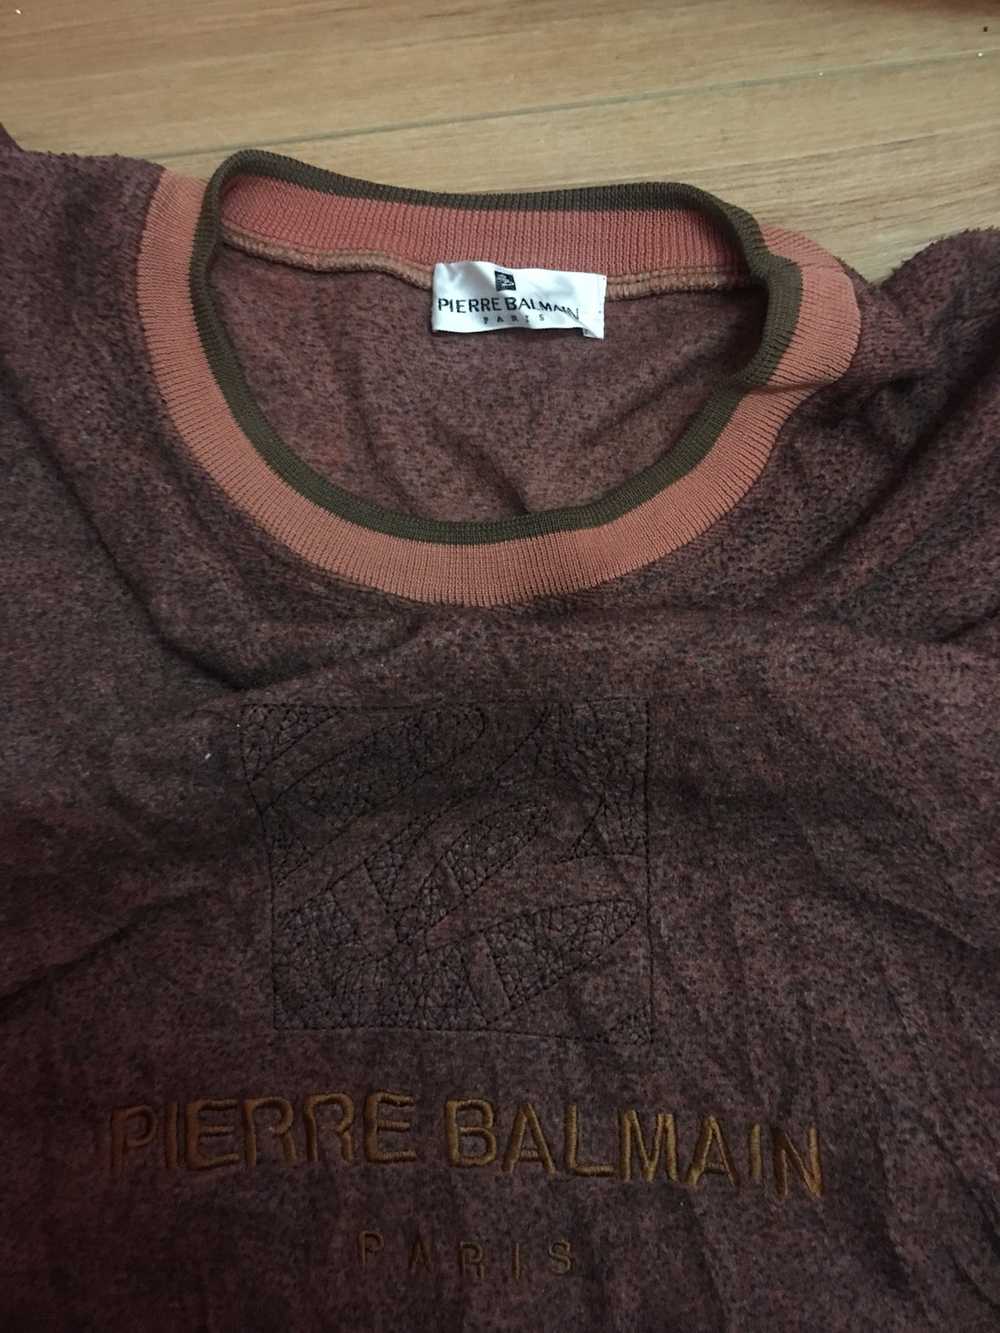 Balmain × Pierre Balmain × Vintage Rare Sweatshir… - image 4